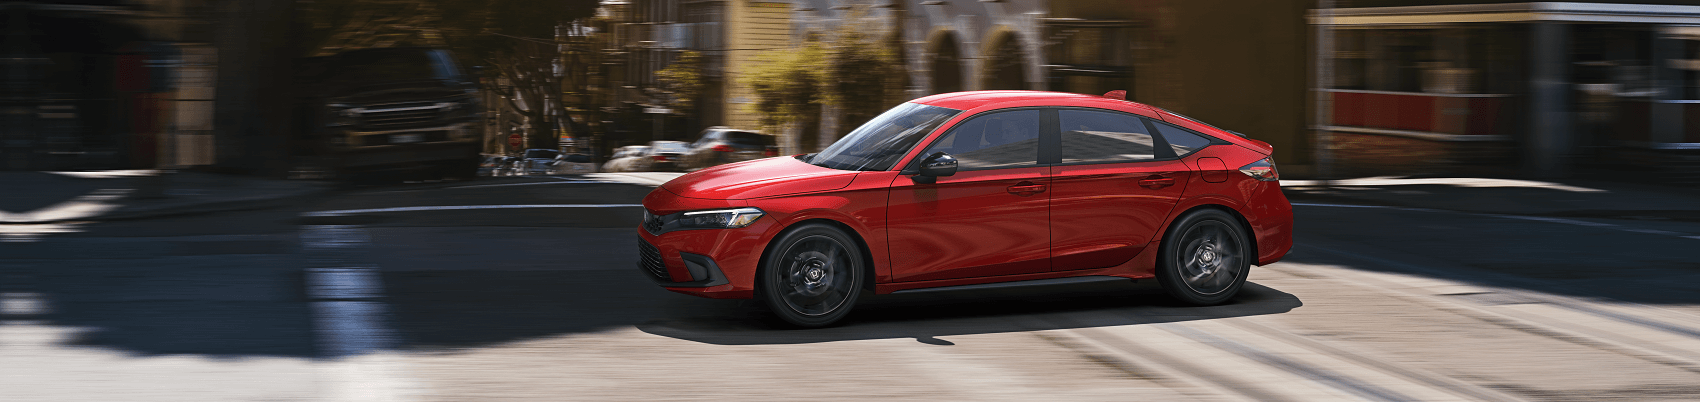 2022 Honda Civic Hatchback Review